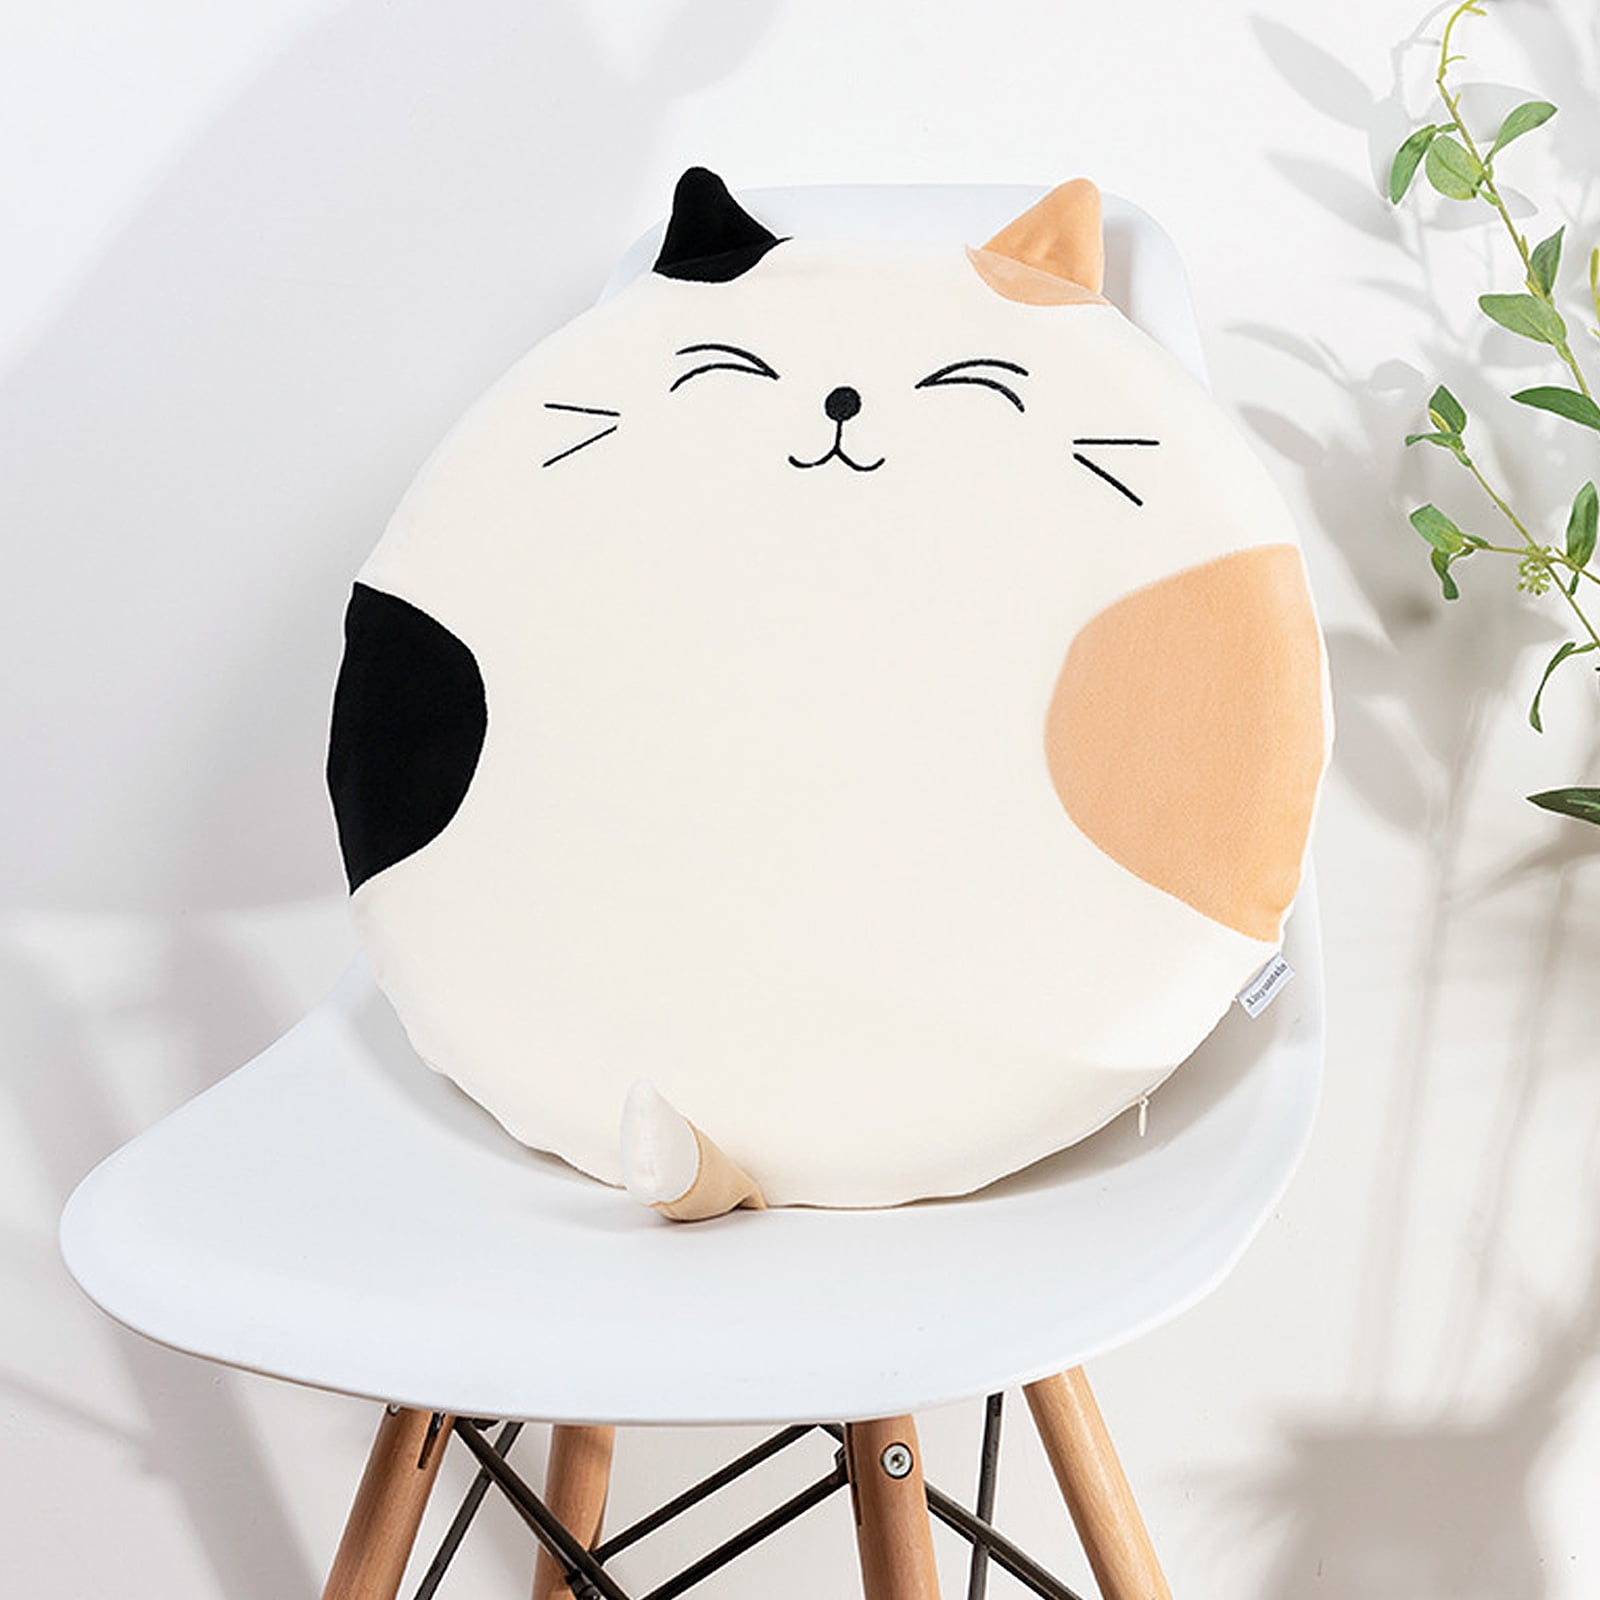 40X40cm Round Plush Cat Style Seat Cushion Chair Soft Memory Foam